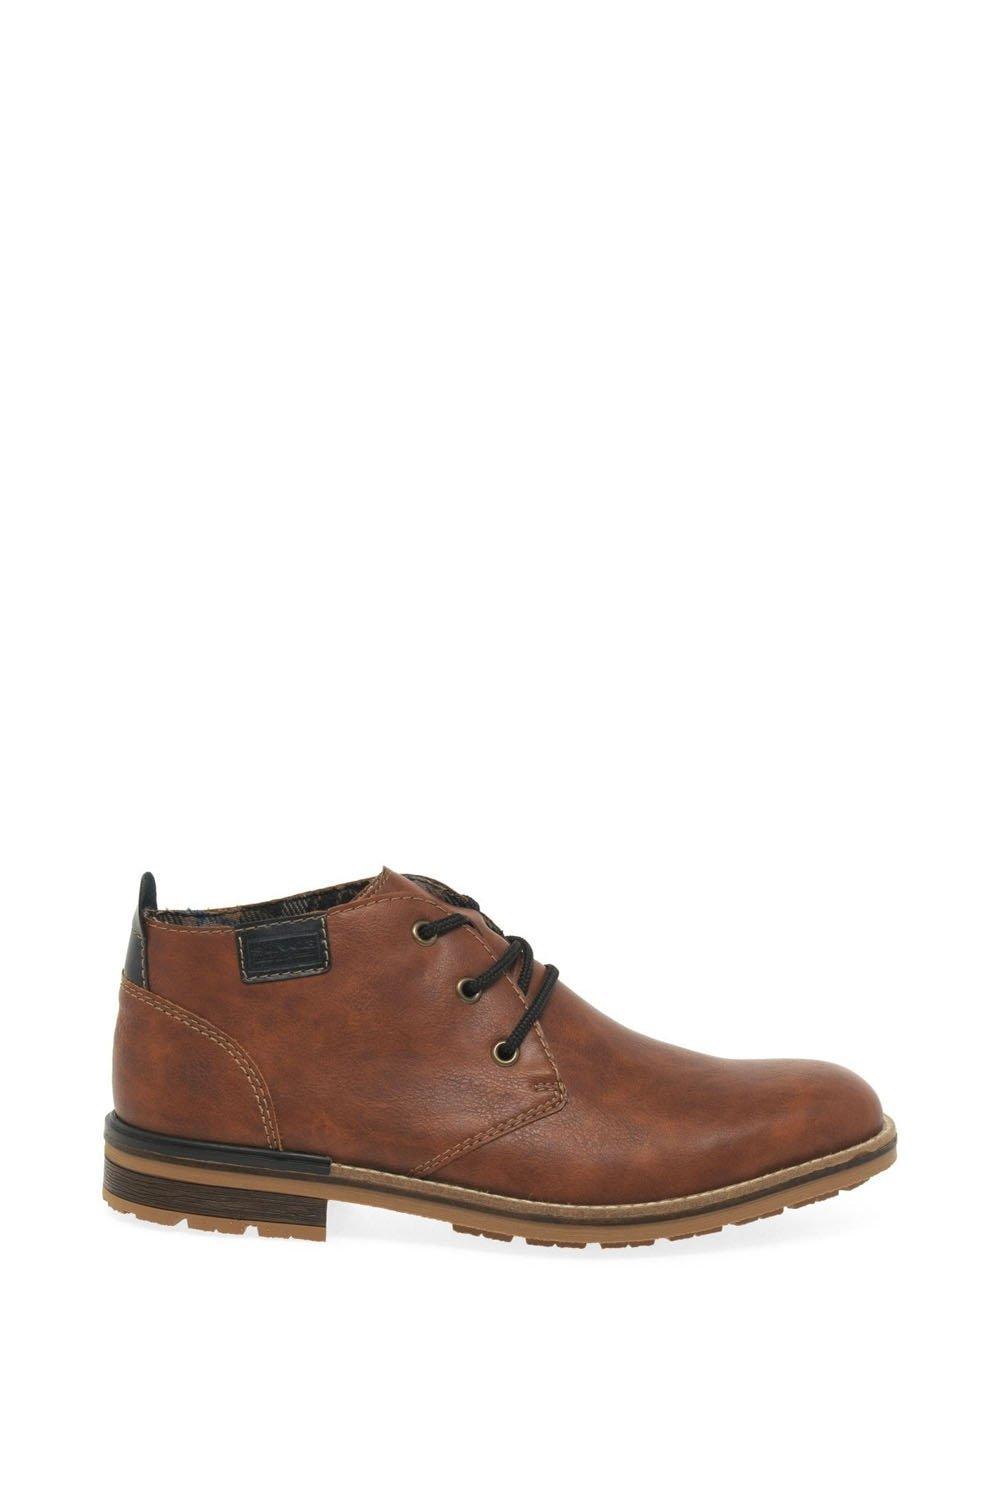 Ботинки чукка 'Лиам' Rieker, коричневый ботинки на шнуровке rieker